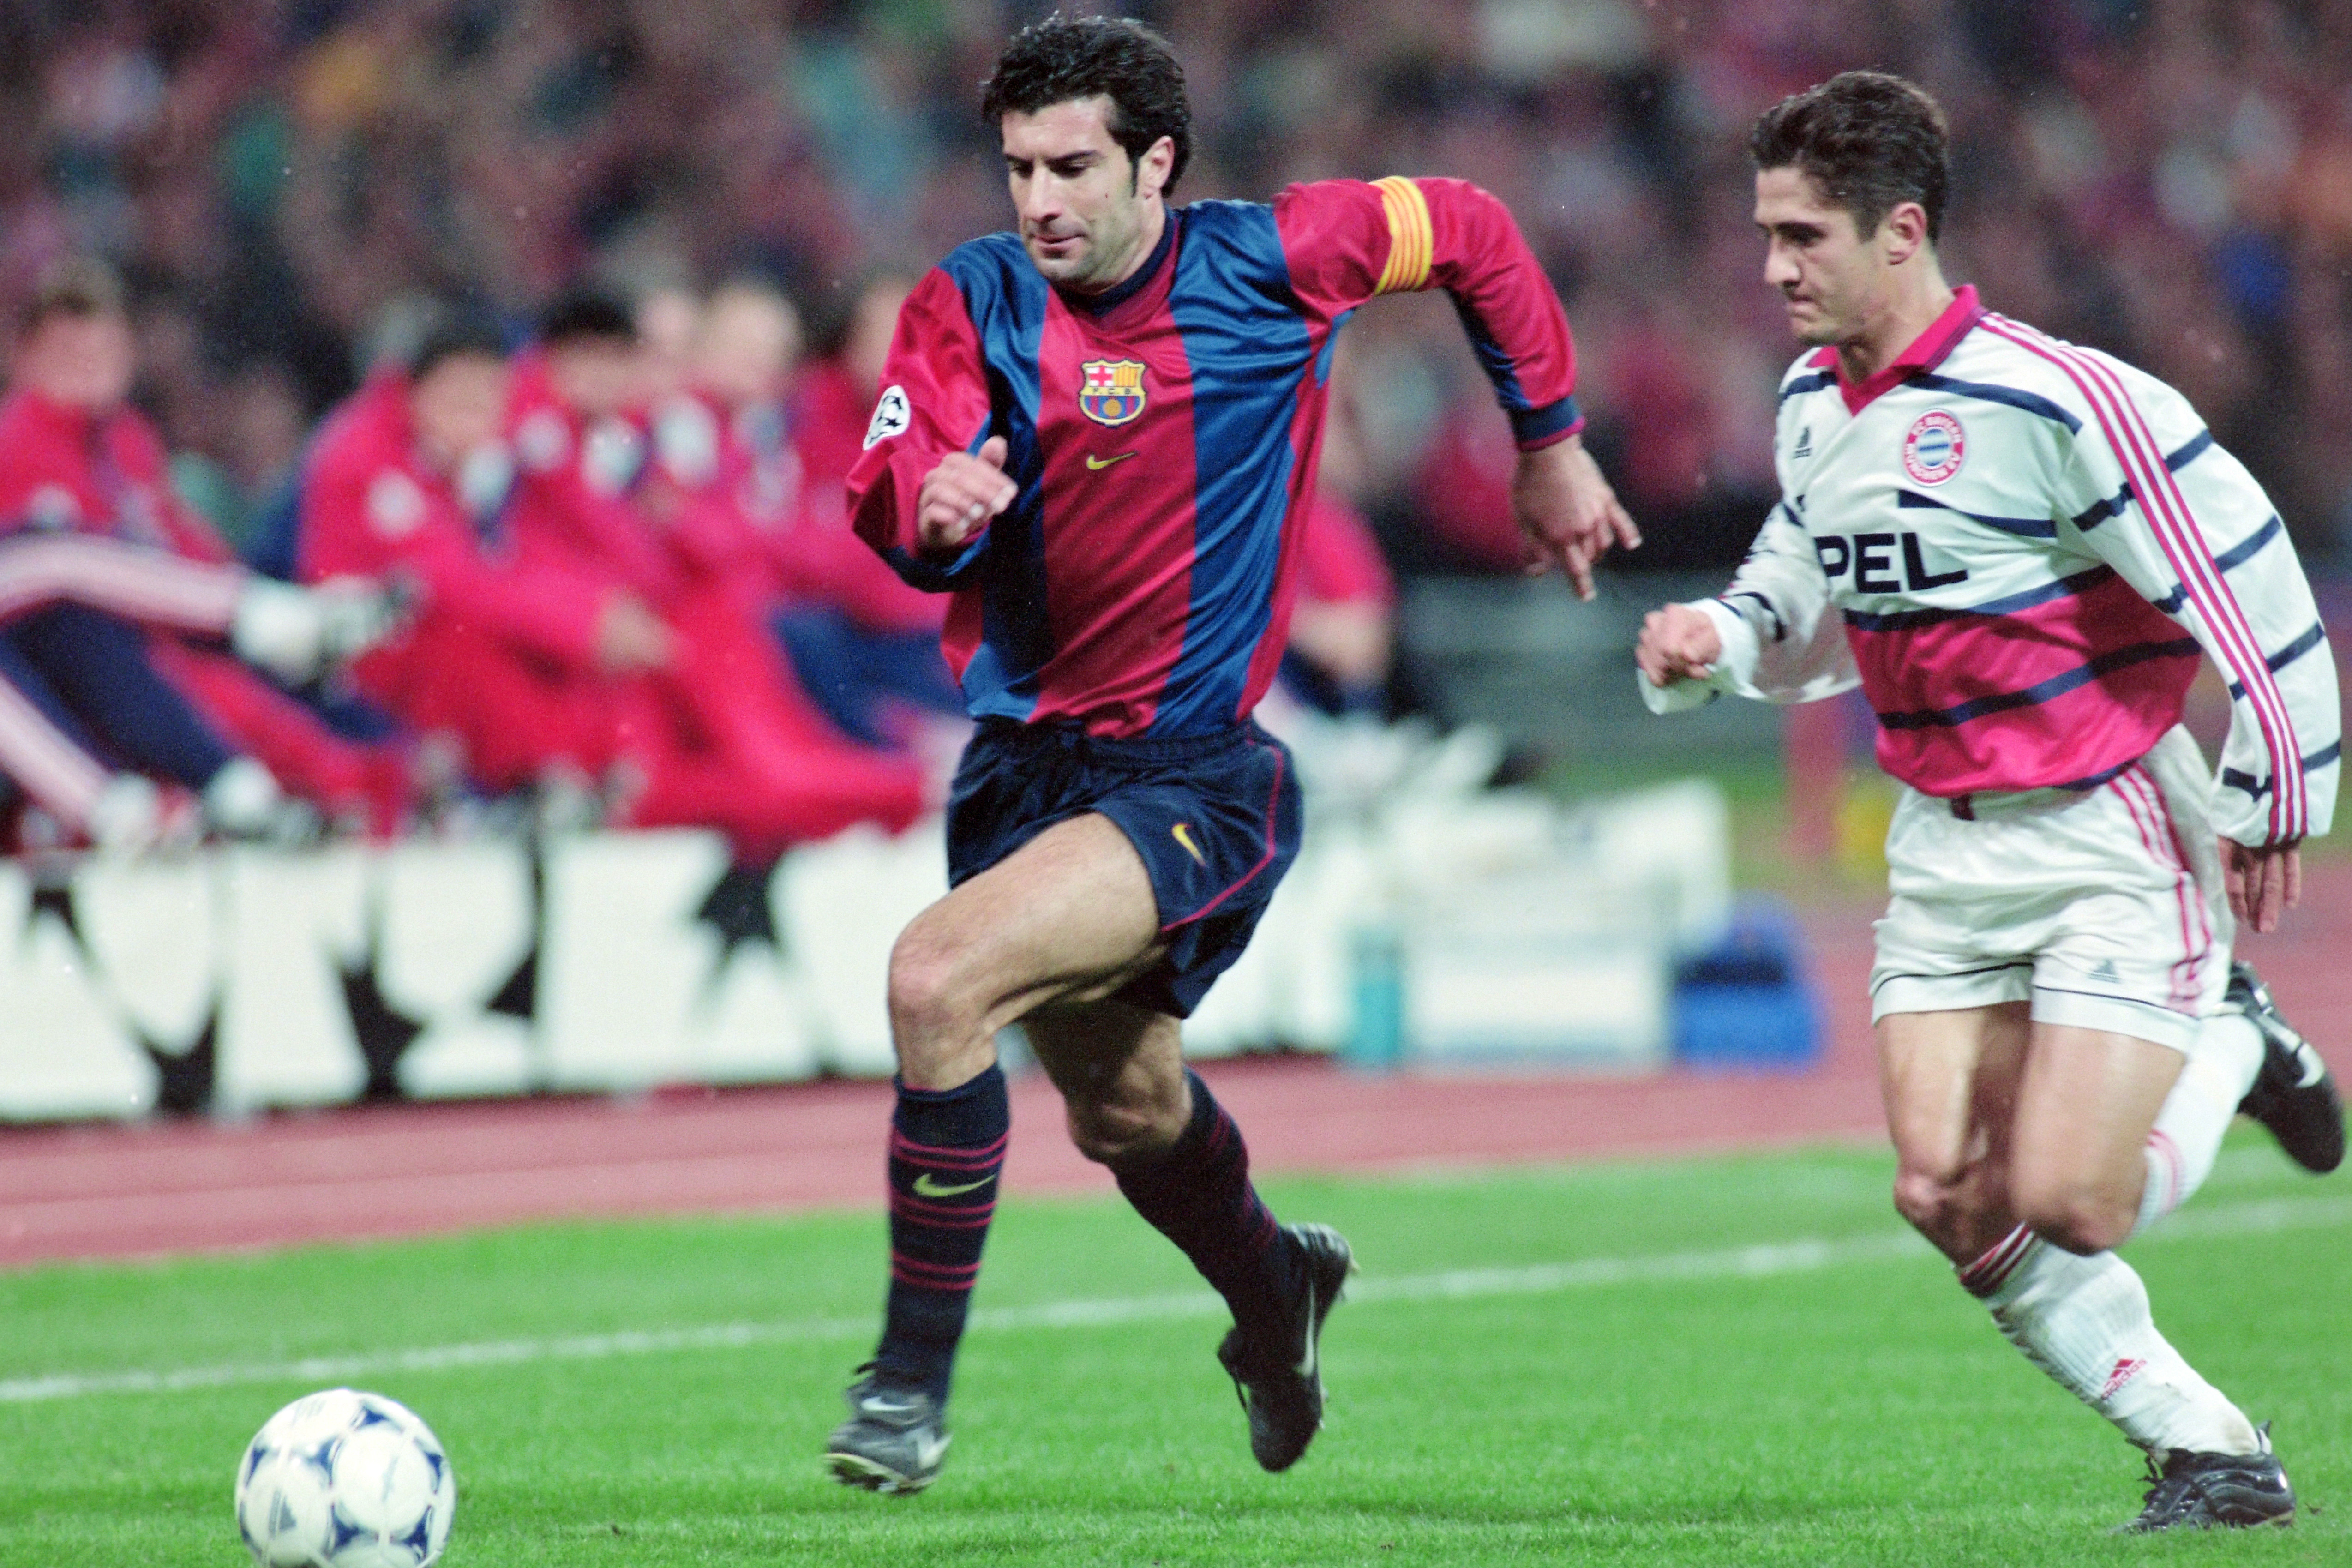 Barcelona's Luis Figo is tracked by Bayern Munich's Bixente Lizarazu in a Champions League game in 1998.